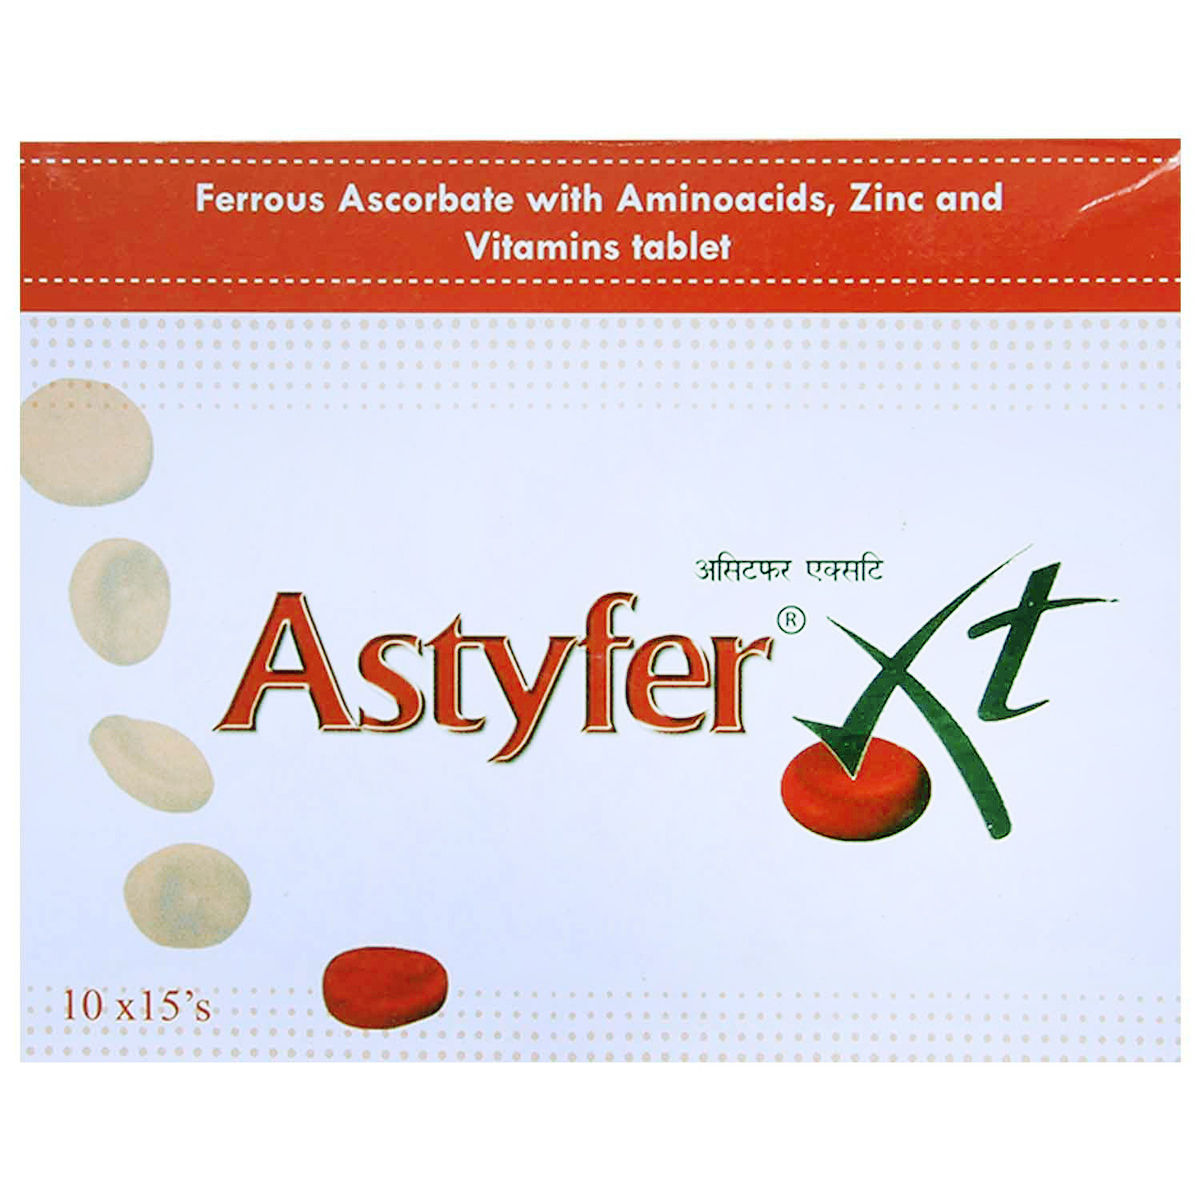 Astyfer Xt Tablet Uses In Hindi